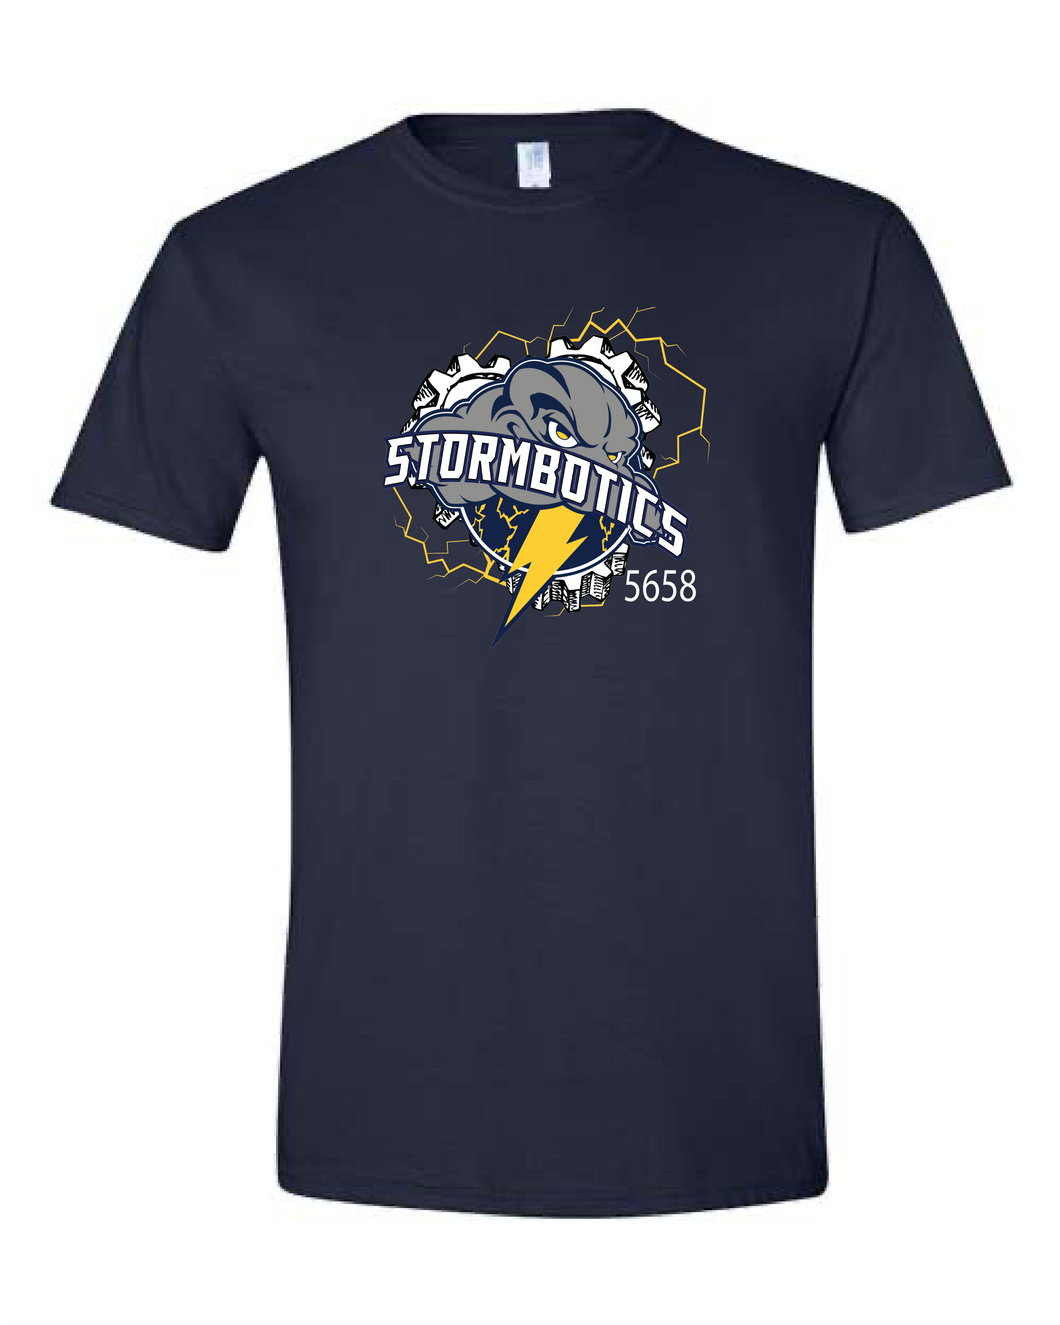 Stormbotics Gildan T-shirt